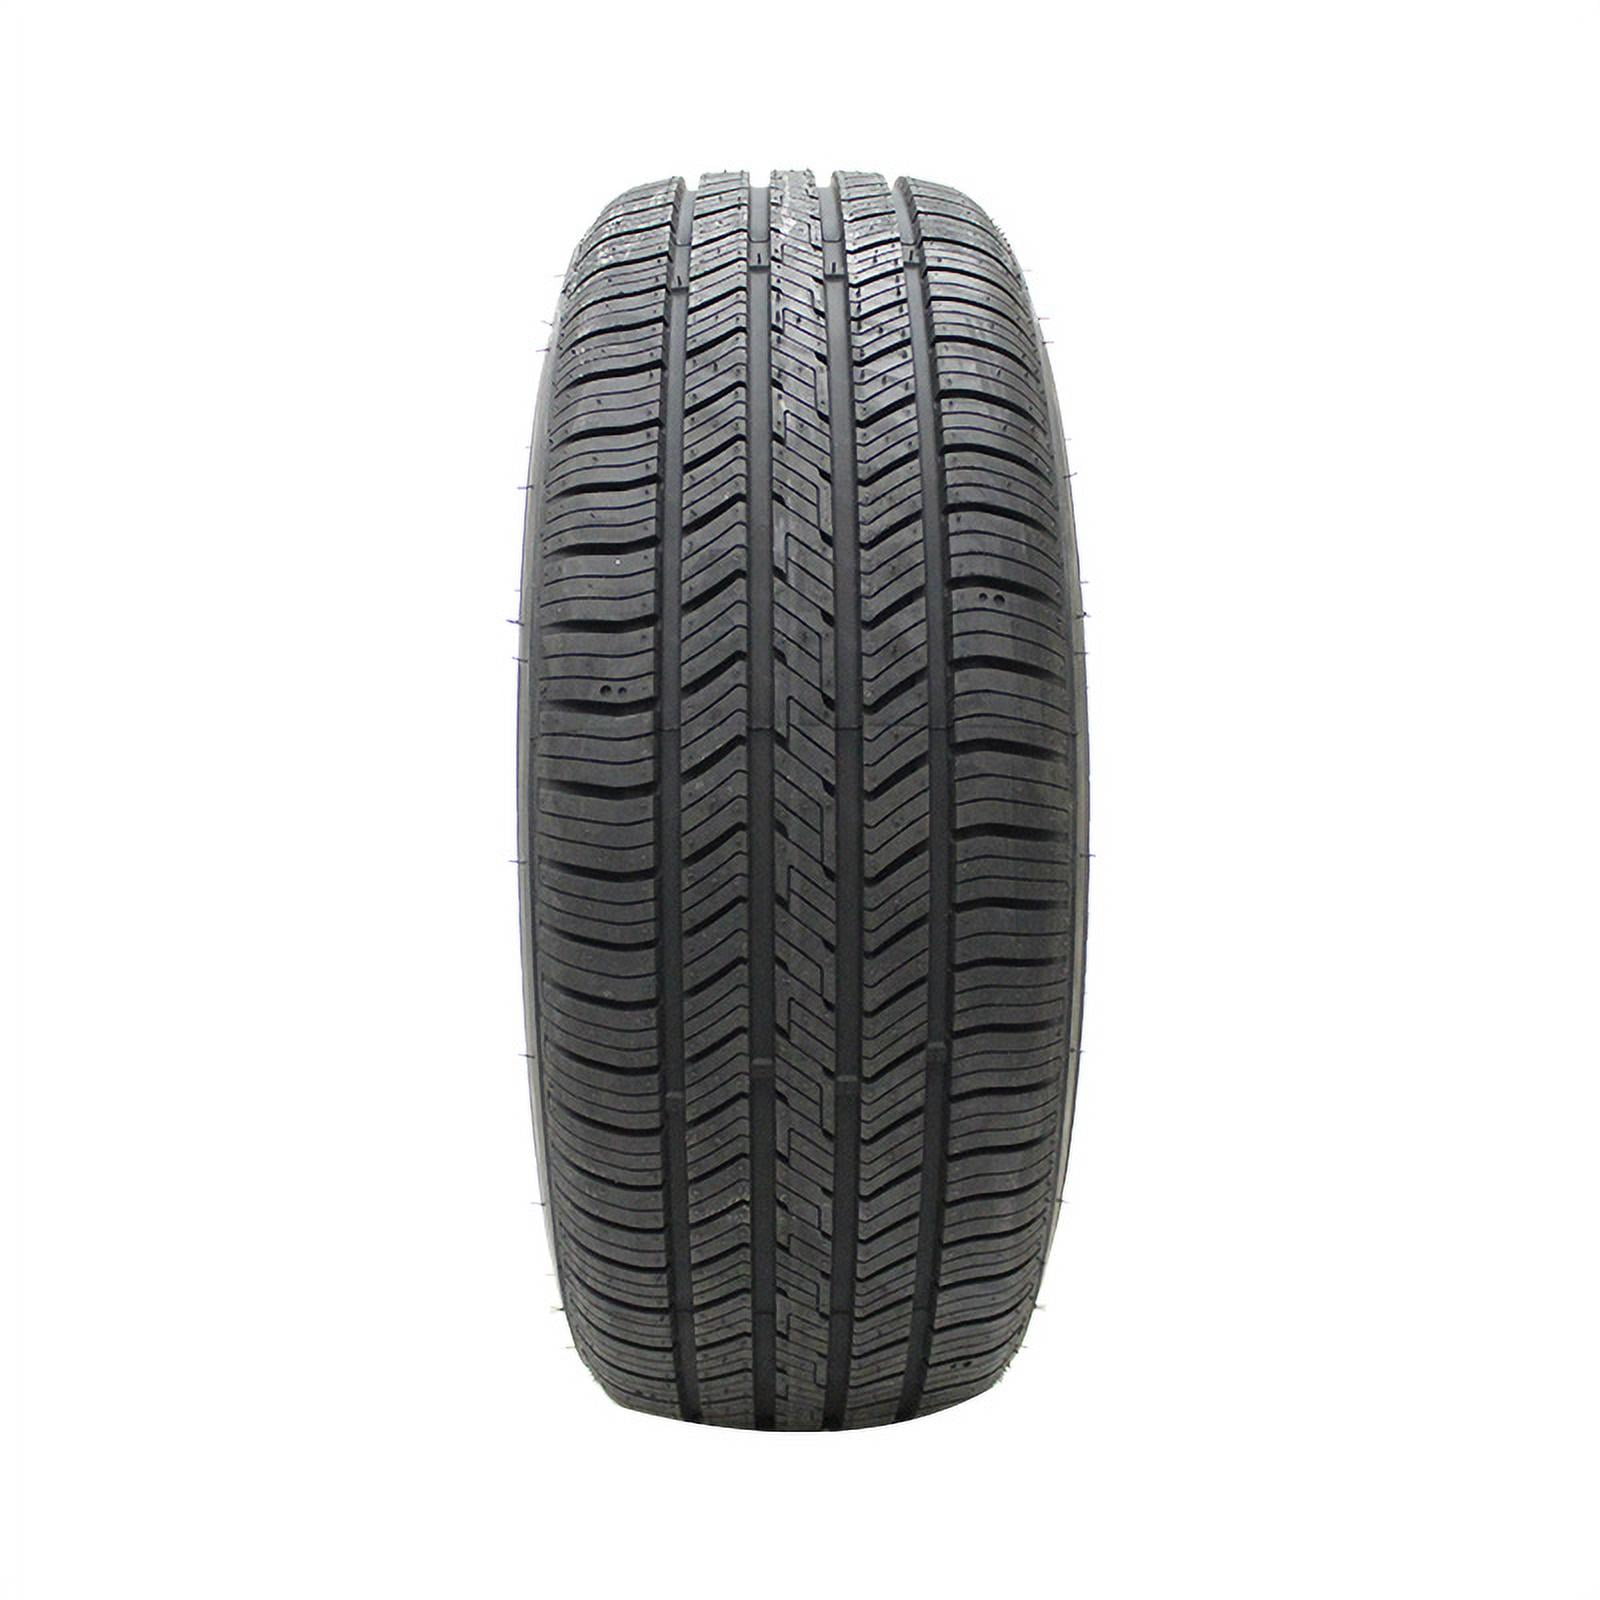 All-Season Radial Tire Hankook KINERGY ST H735 185/65R15 88T 